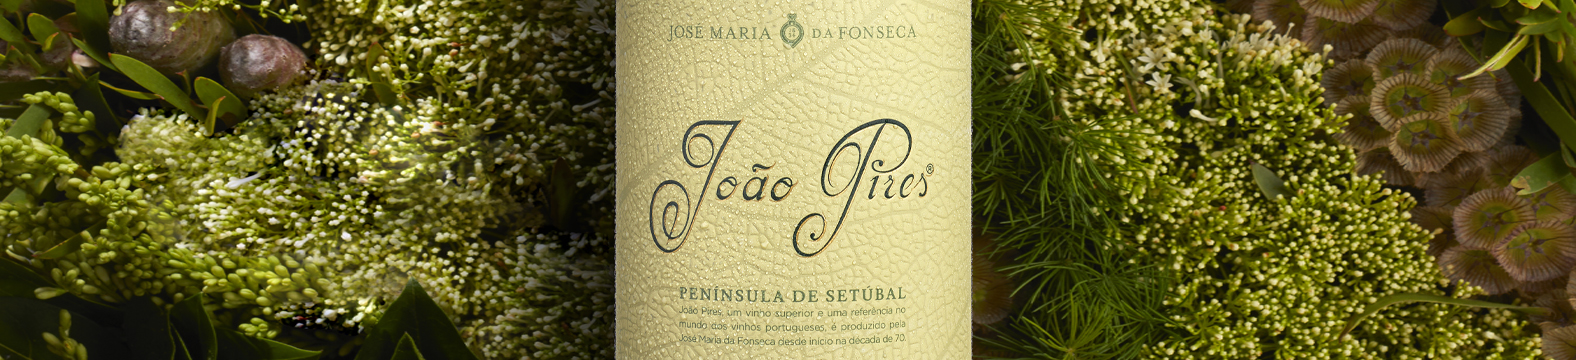 Omdesign signs the rebranding of João Pires wine